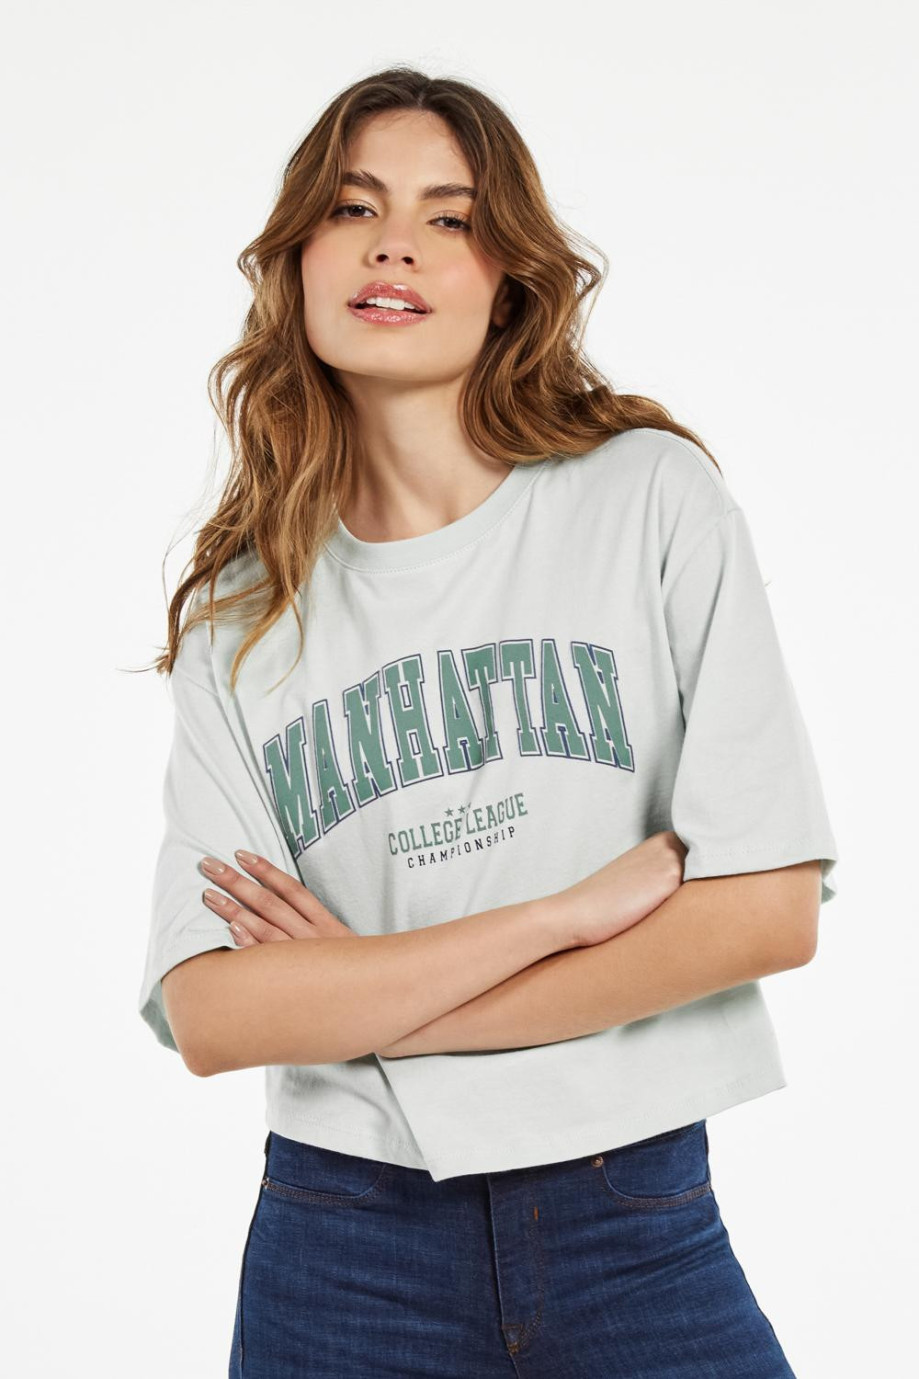 Camiseta crop top verde clara con diseño college de Manhattan